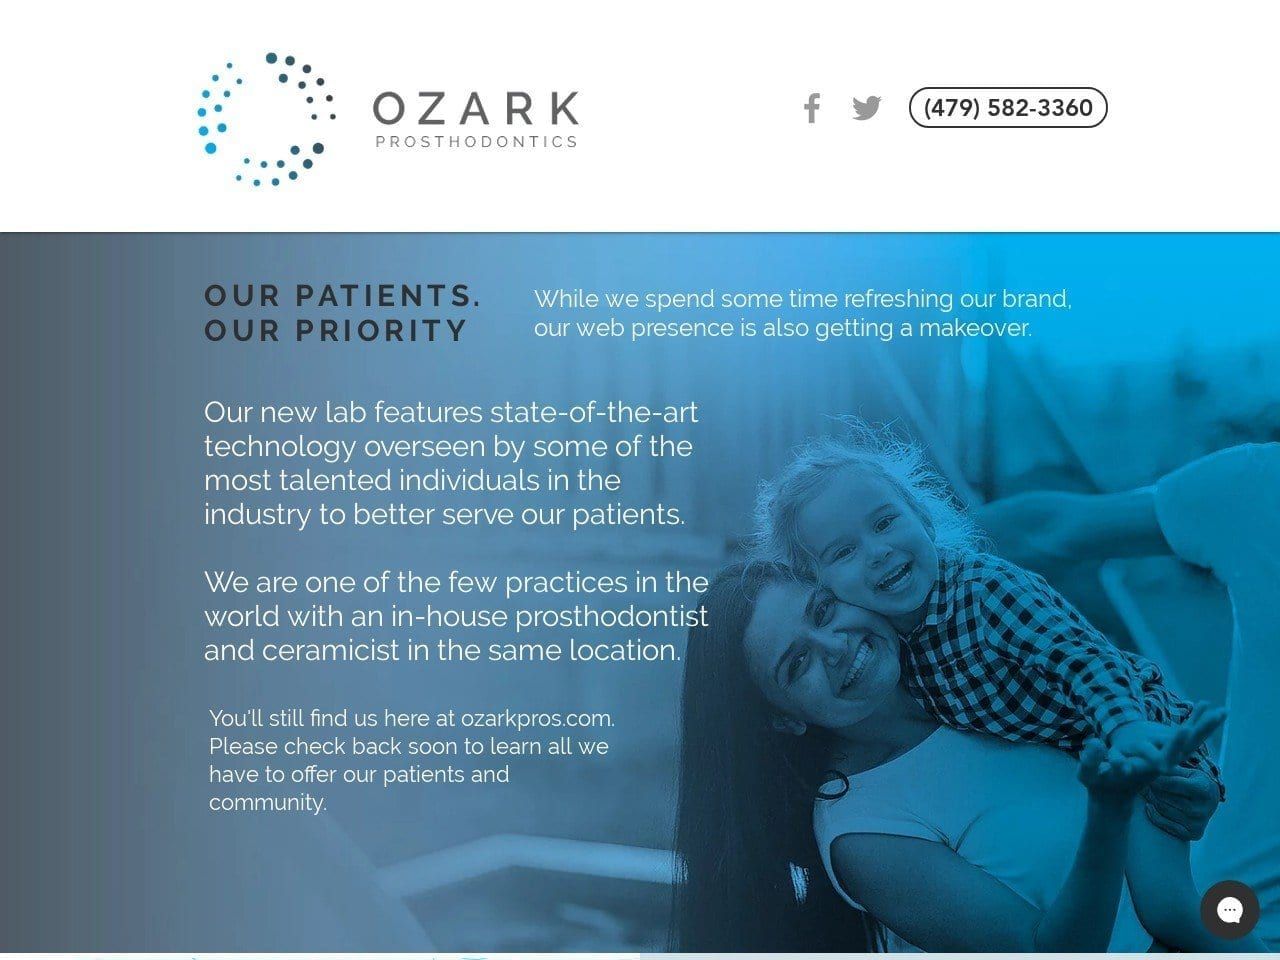 Ozark Prosthodontics Website Screenshot from ozarkpros.com